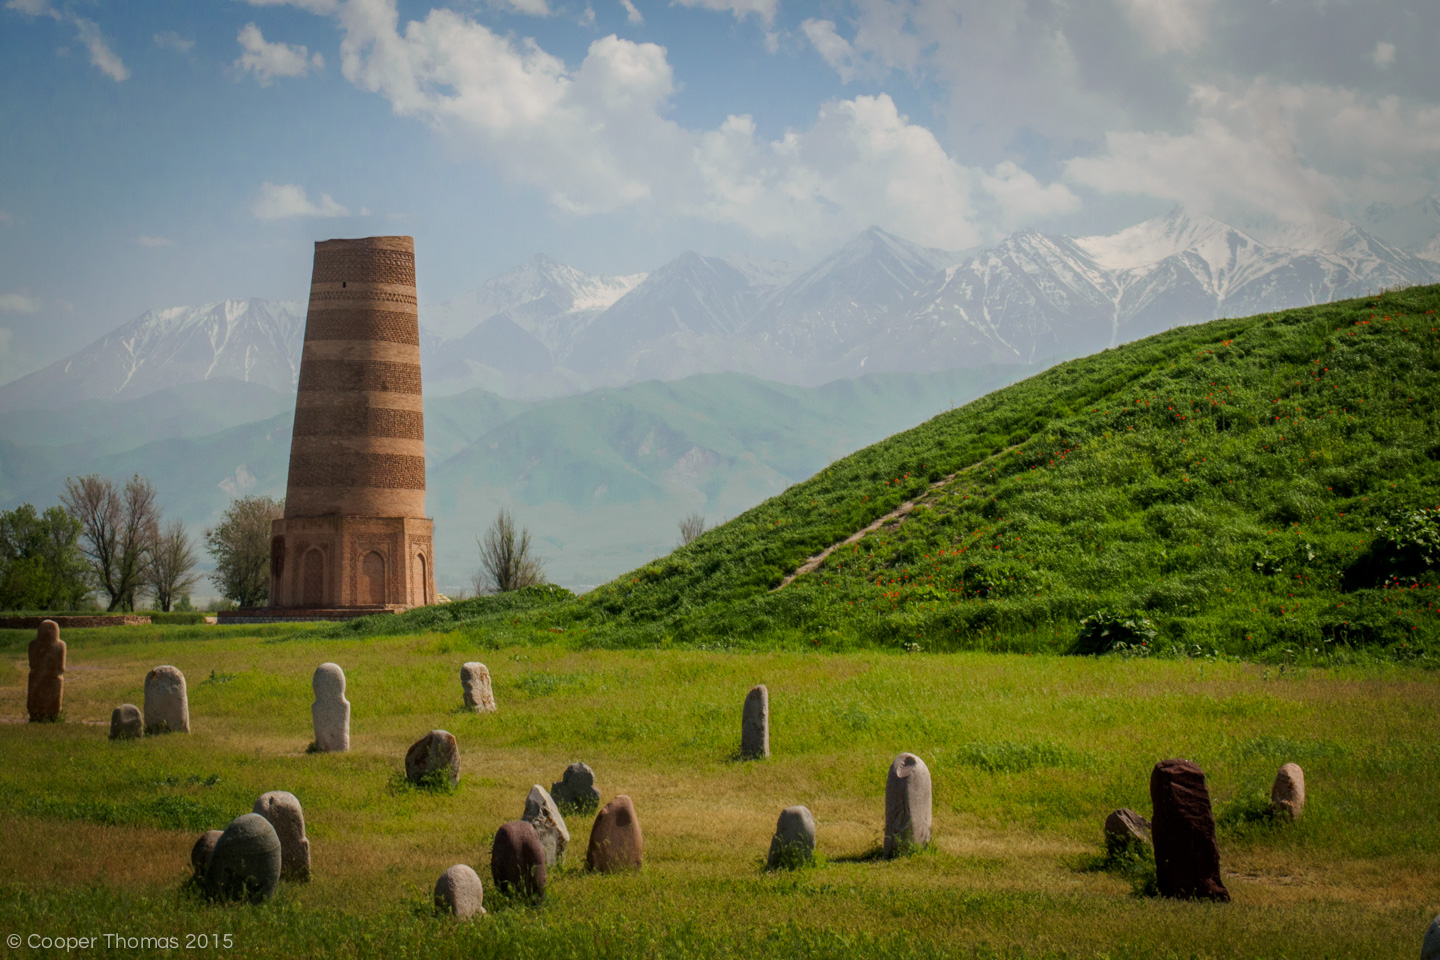 Баласагун. Башня Бурана Киргизия. Киргизия достопримечательности башня Бурана. Токмак башня Бурана. Башня Бурана Чуй Киргизия.